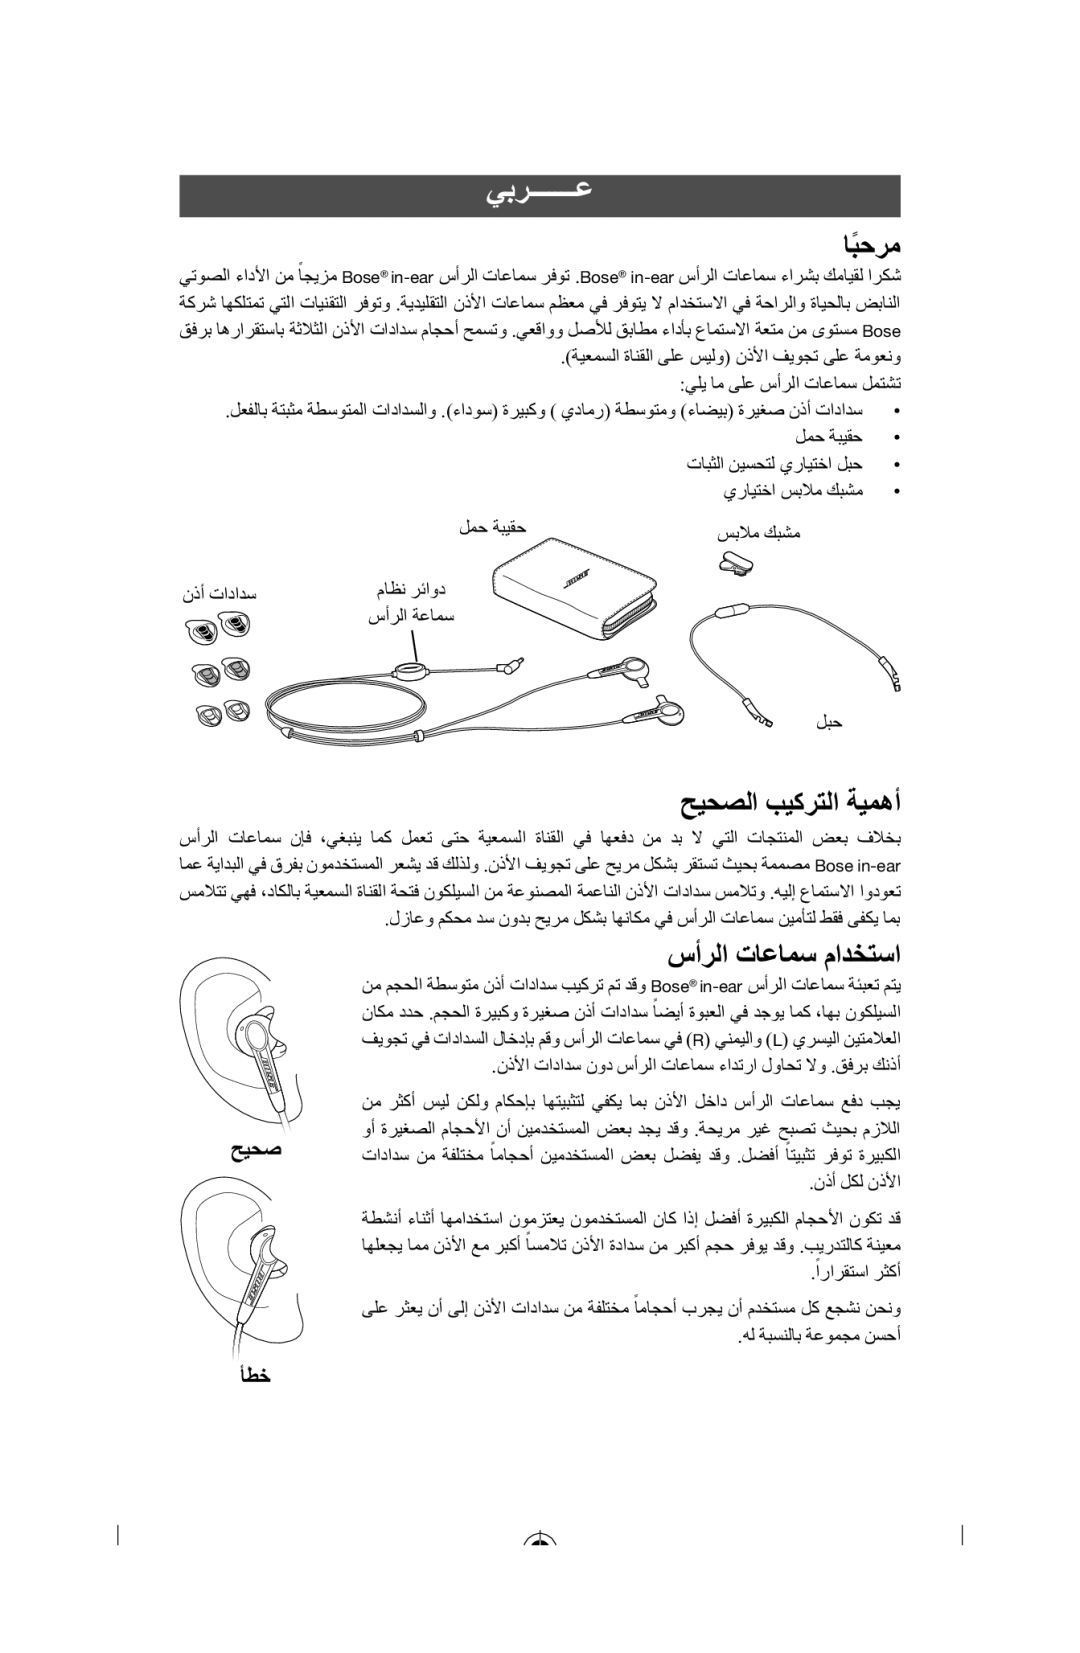 Bose In-Ear Headphones manual ﺎﺒﺣﺮﻣً, ﺢﻴﺤﺼﻟا ﺐﻴﻛﺮﺘﻟا ﺔﻴﻤﻫأ, سأﺮﻟا تﺎﻋﺎﻤﺳ ماﺪﺨﺘﺳا, ﻲﺑﺮـــــــﻋ 